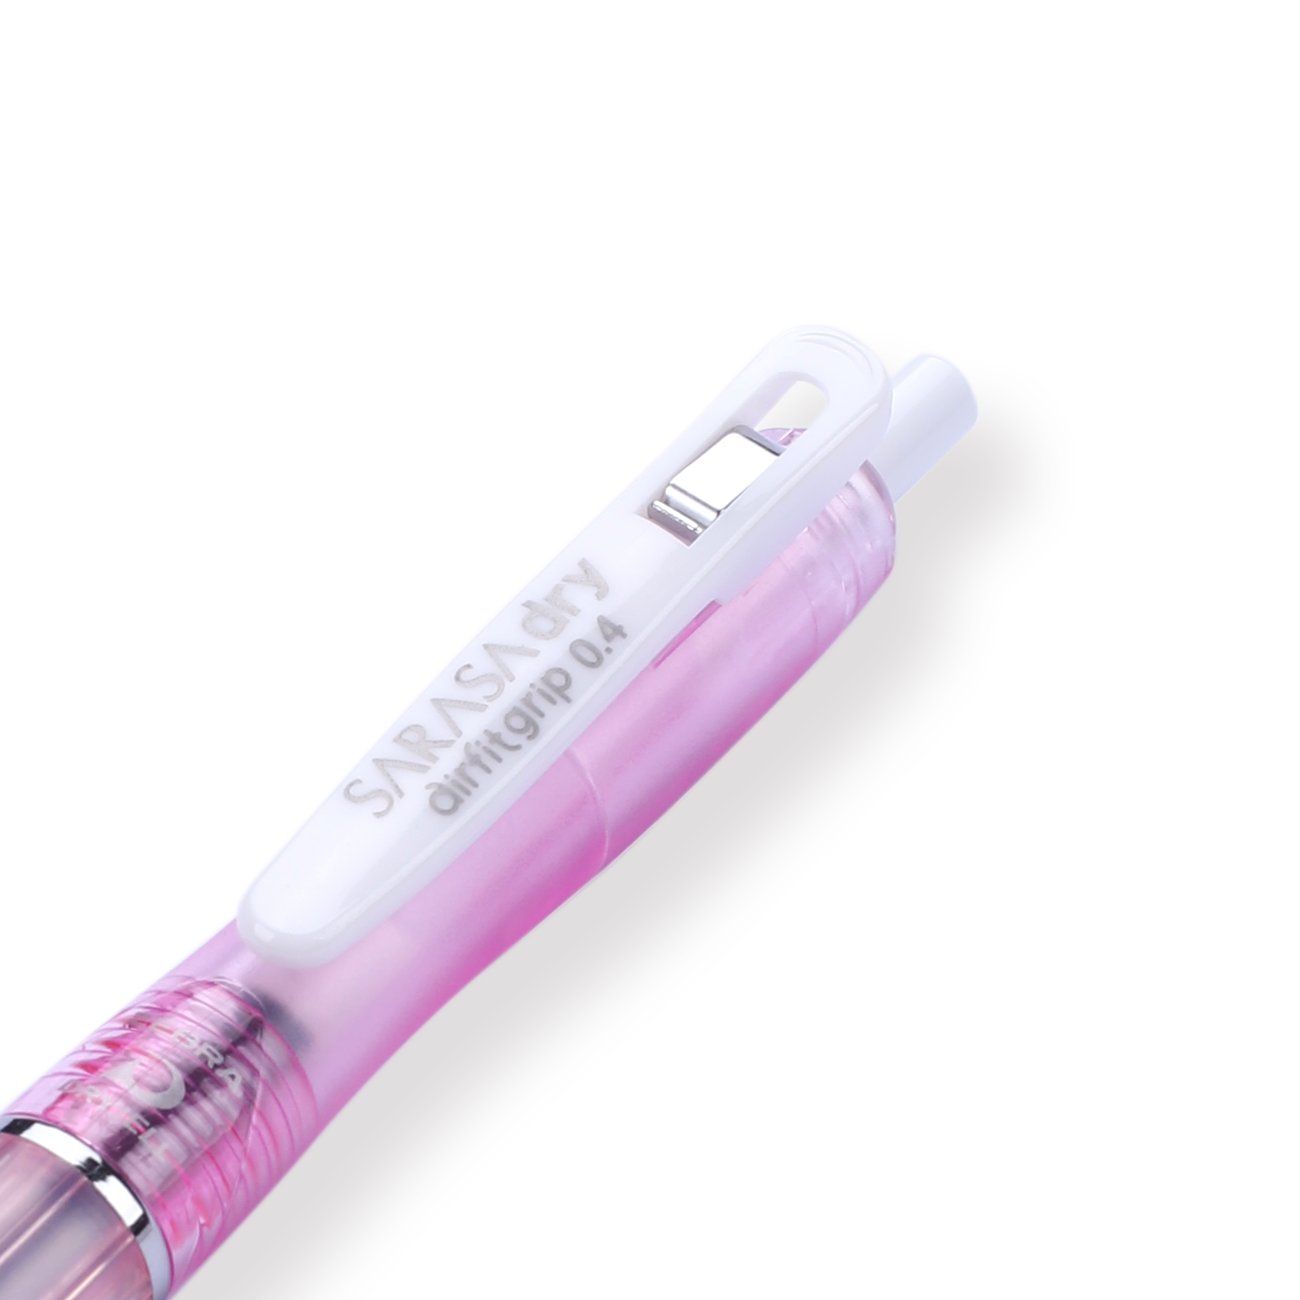 Zebra Sarasa Dry Airfit Ballpoint Pen - 0.4 mm - Black - Pink Body